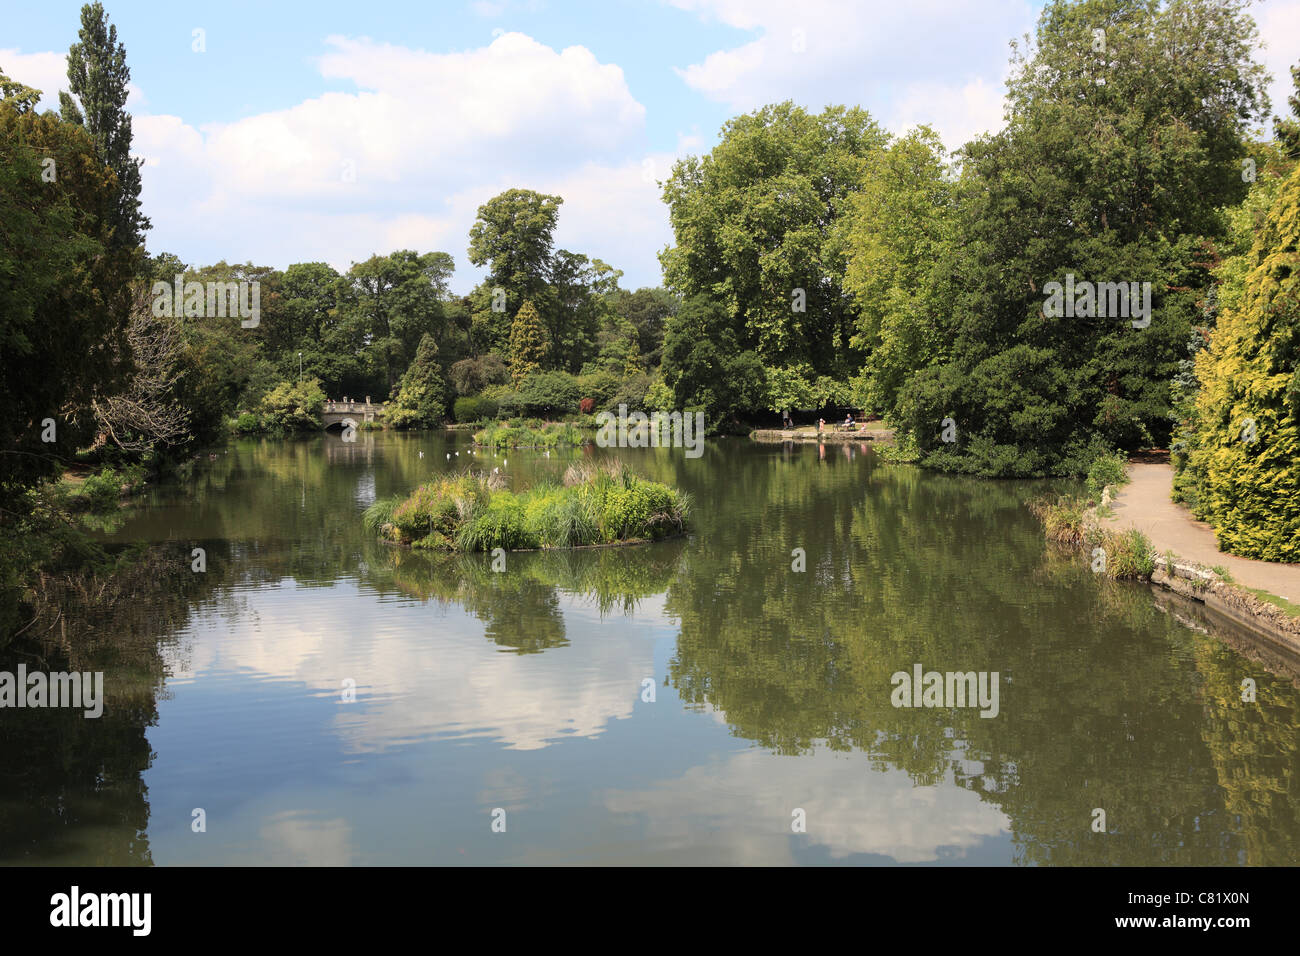 The ornamental lakes of Pittville Park, Cheltenham Spa, Gloucestershire, England, UK Stock Photo